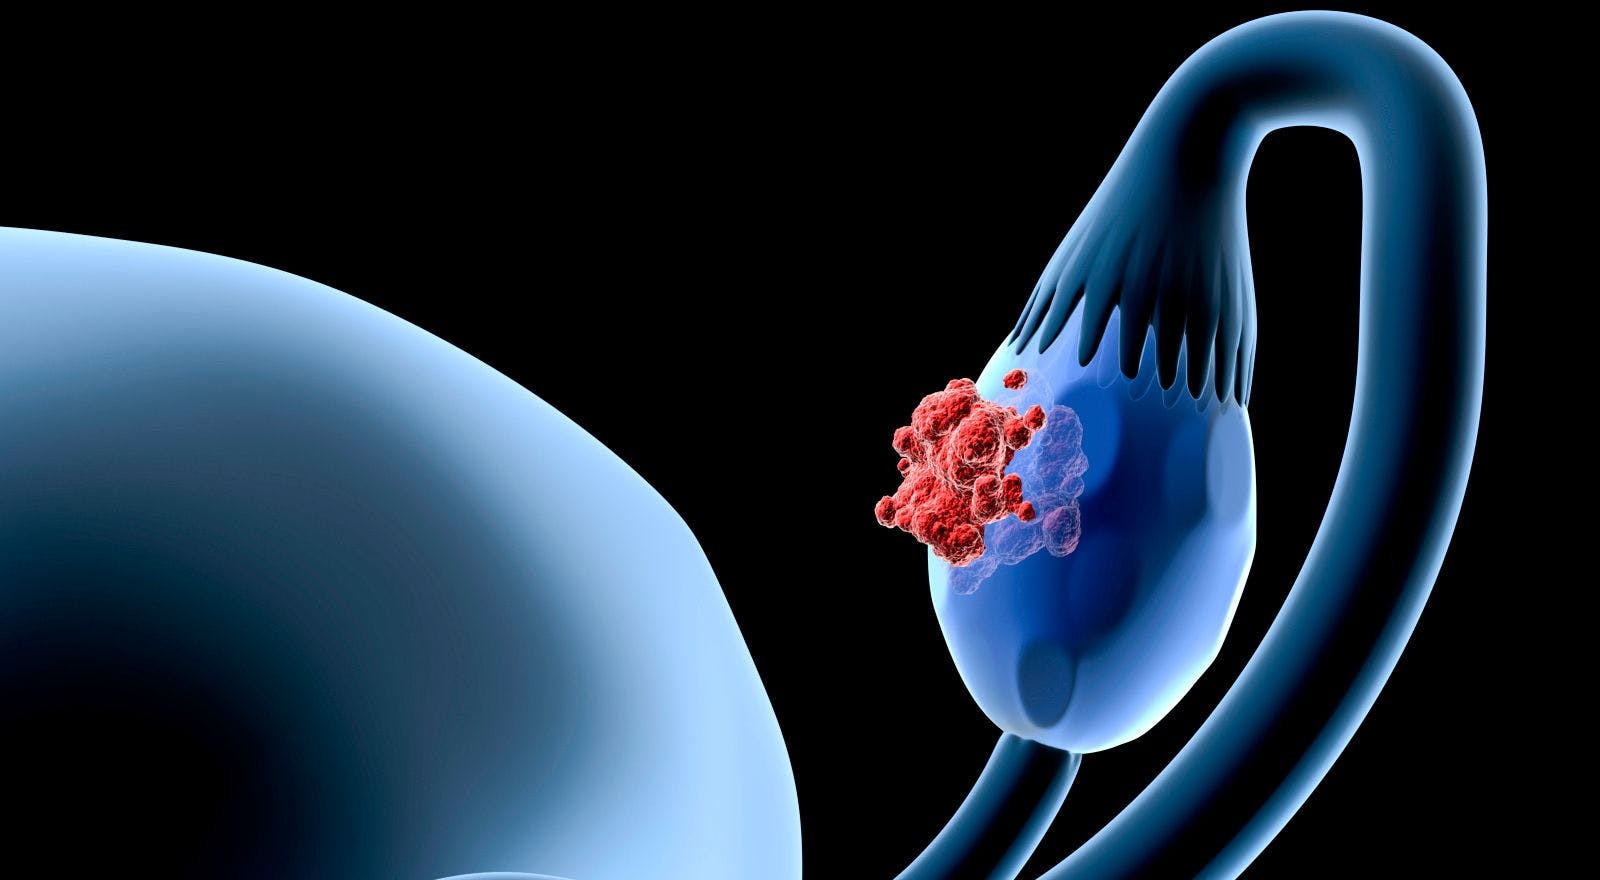 Targeting Ovarian Cancer